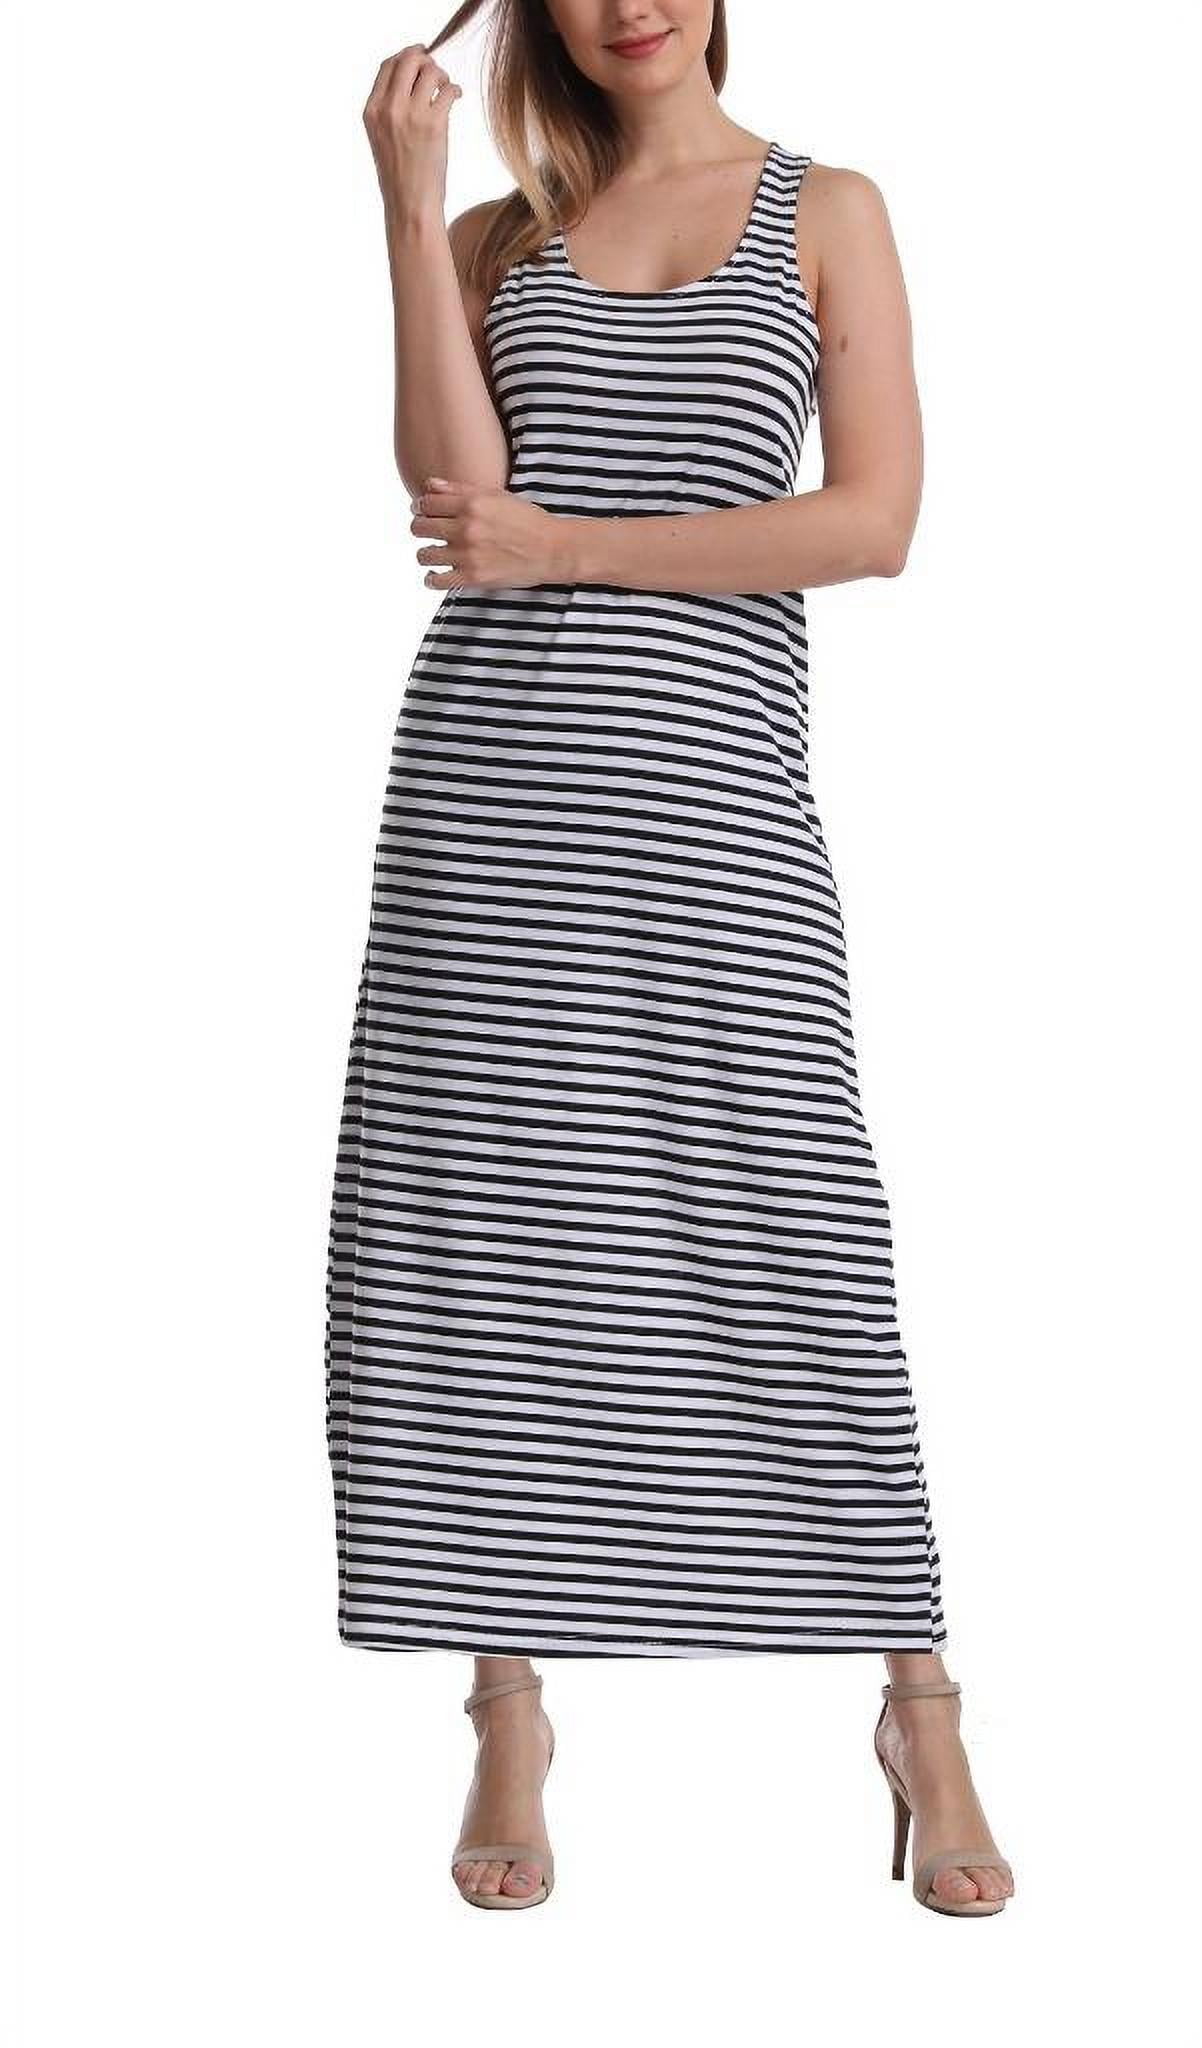 SUMONA Women Long Tank Tops Ankle Length Maxi Dress - Walmart.com